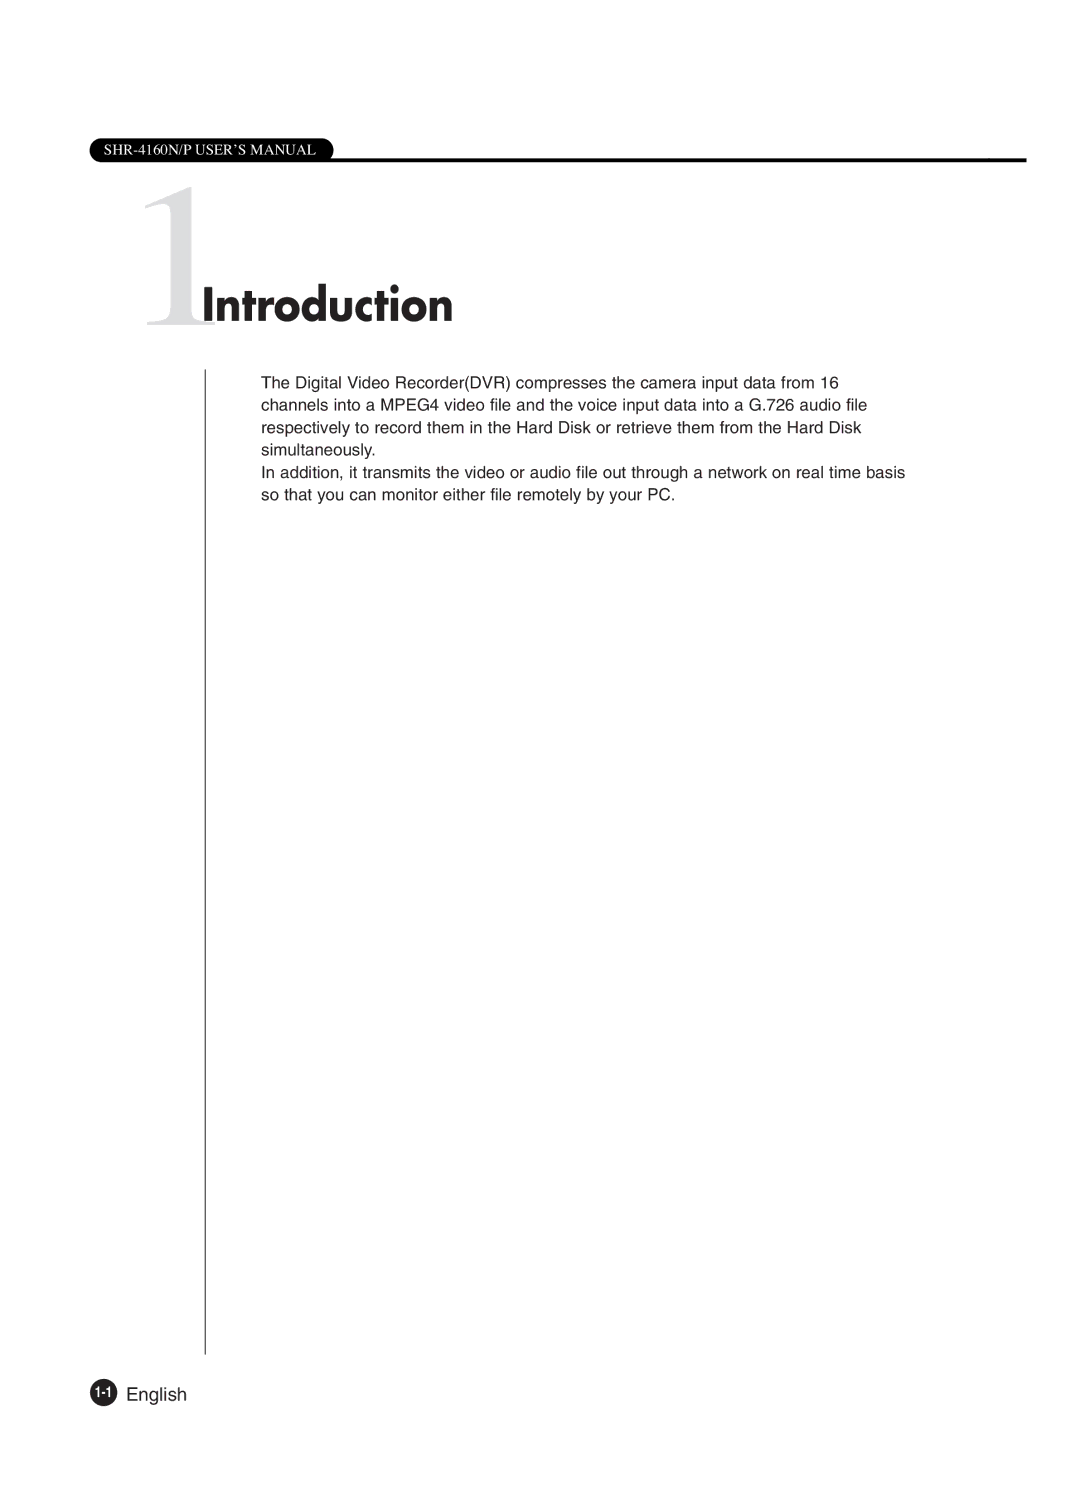 Samsung SHR-4160P manual 1Introduction, 1English 